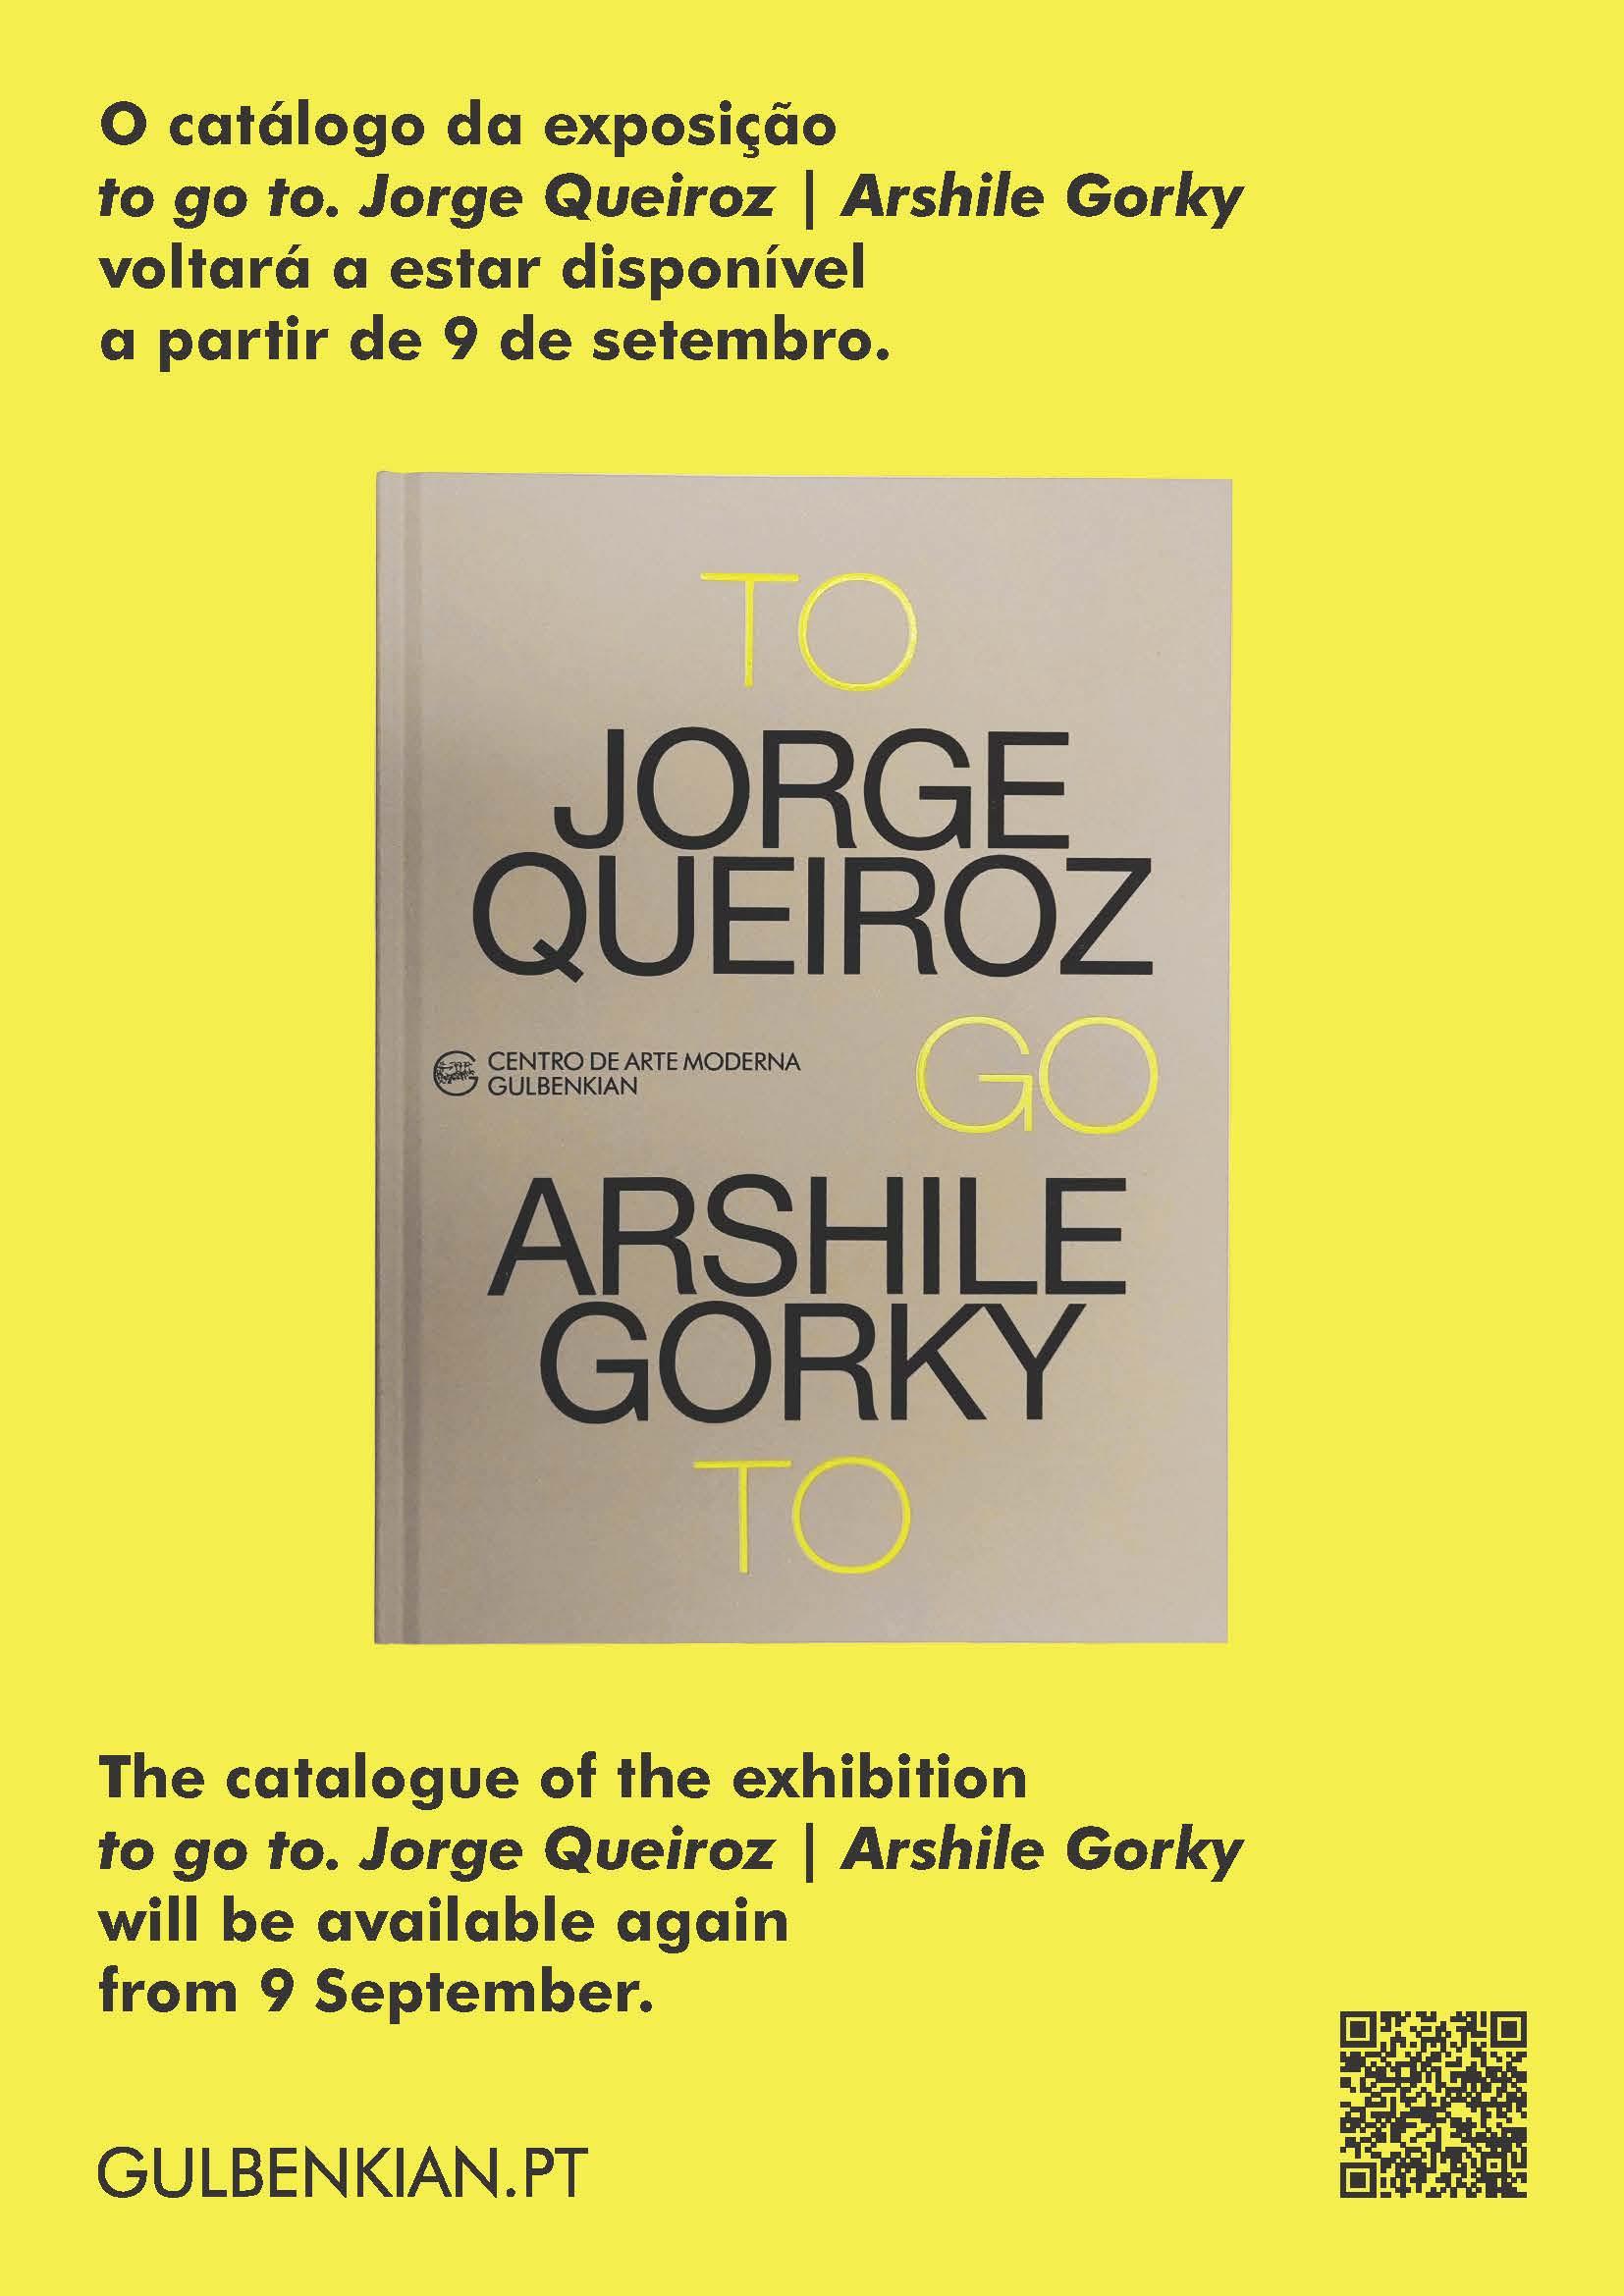 To go to. Jorge Queiroz | Arshile Gorky